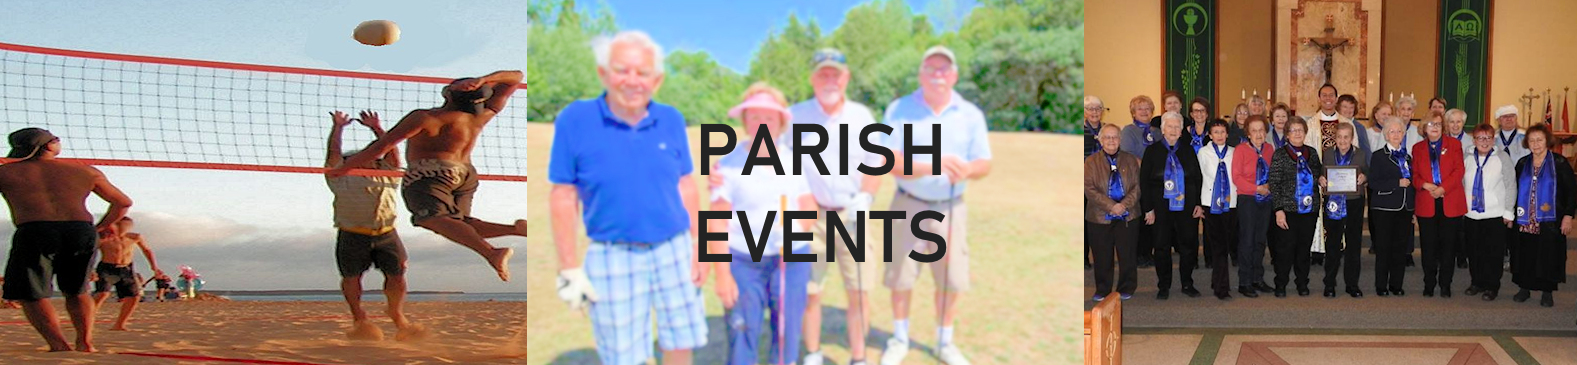 Parish Events Banner